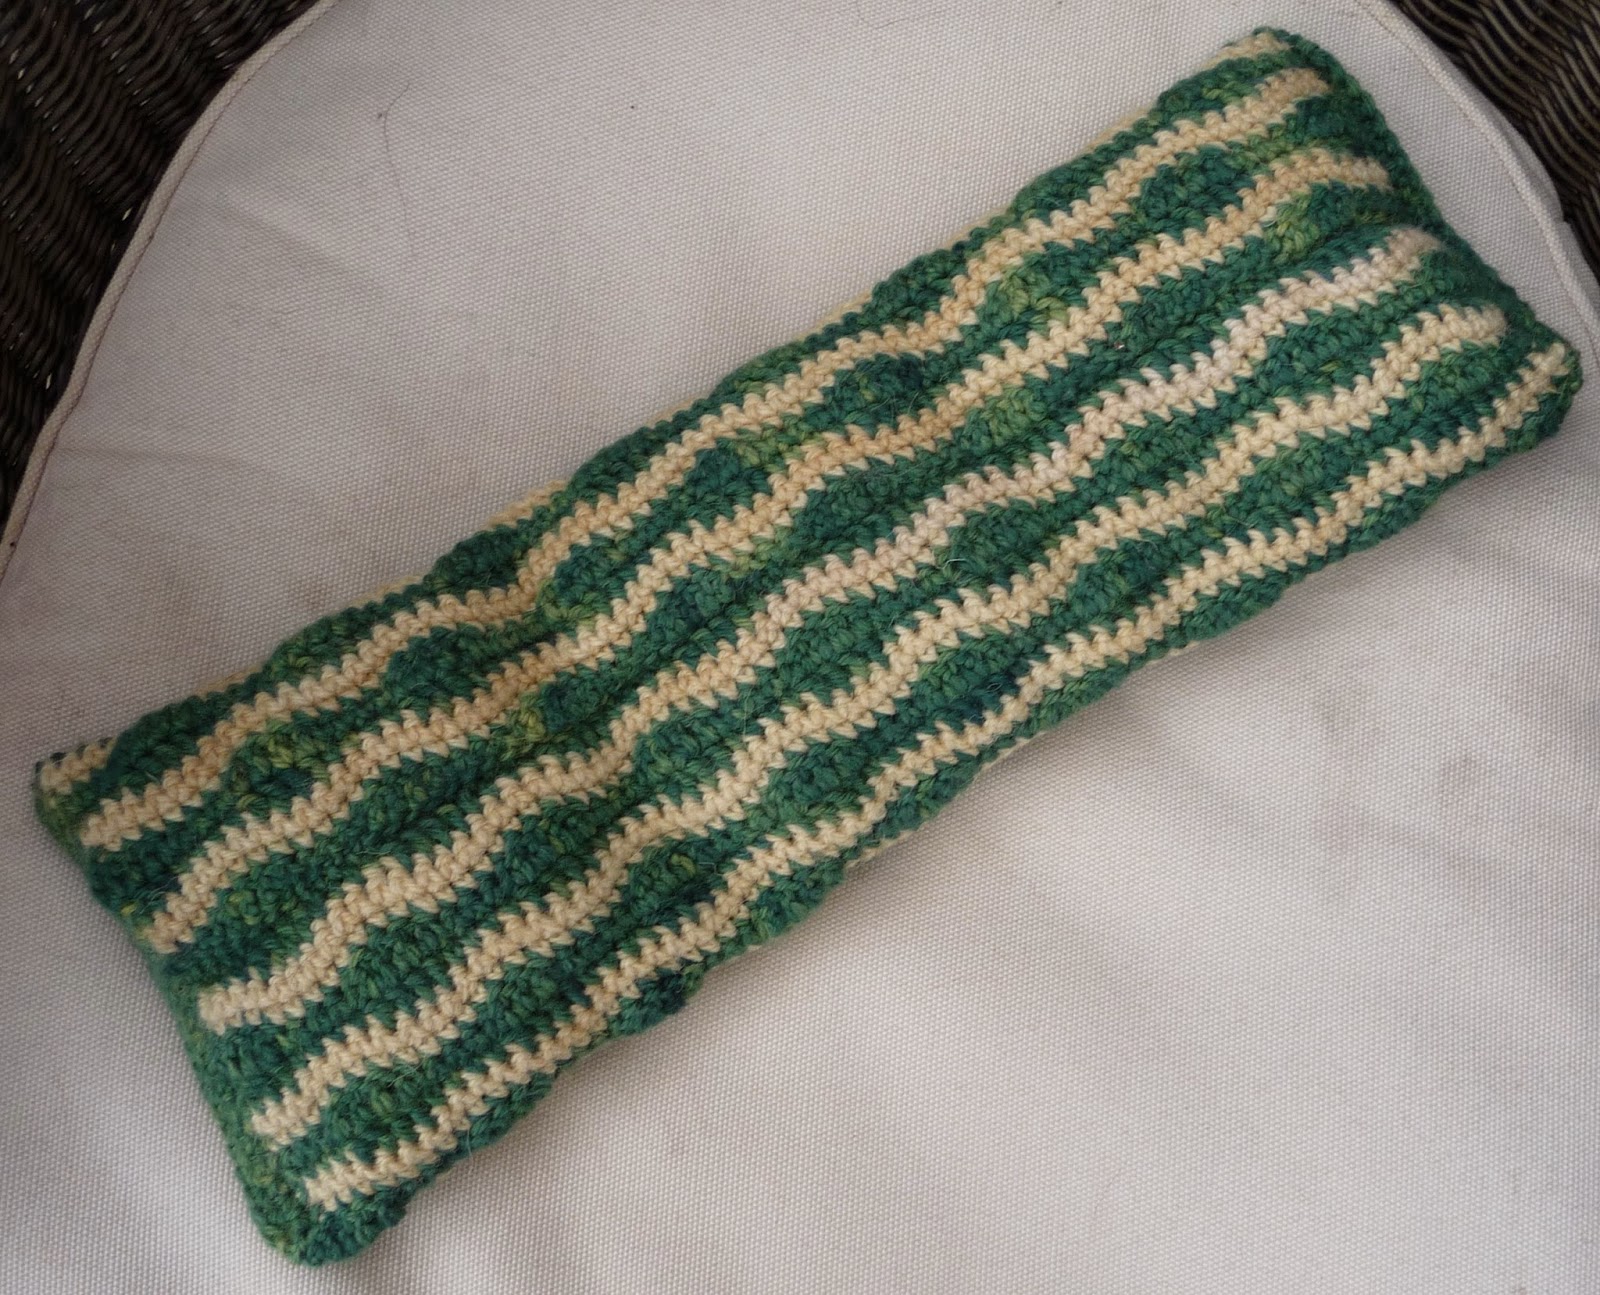 3 50g skeins of hand-spun black Welsh yarn, looking for simple  shawl/wrap/cardigan ideas? : r/crochetpatterns